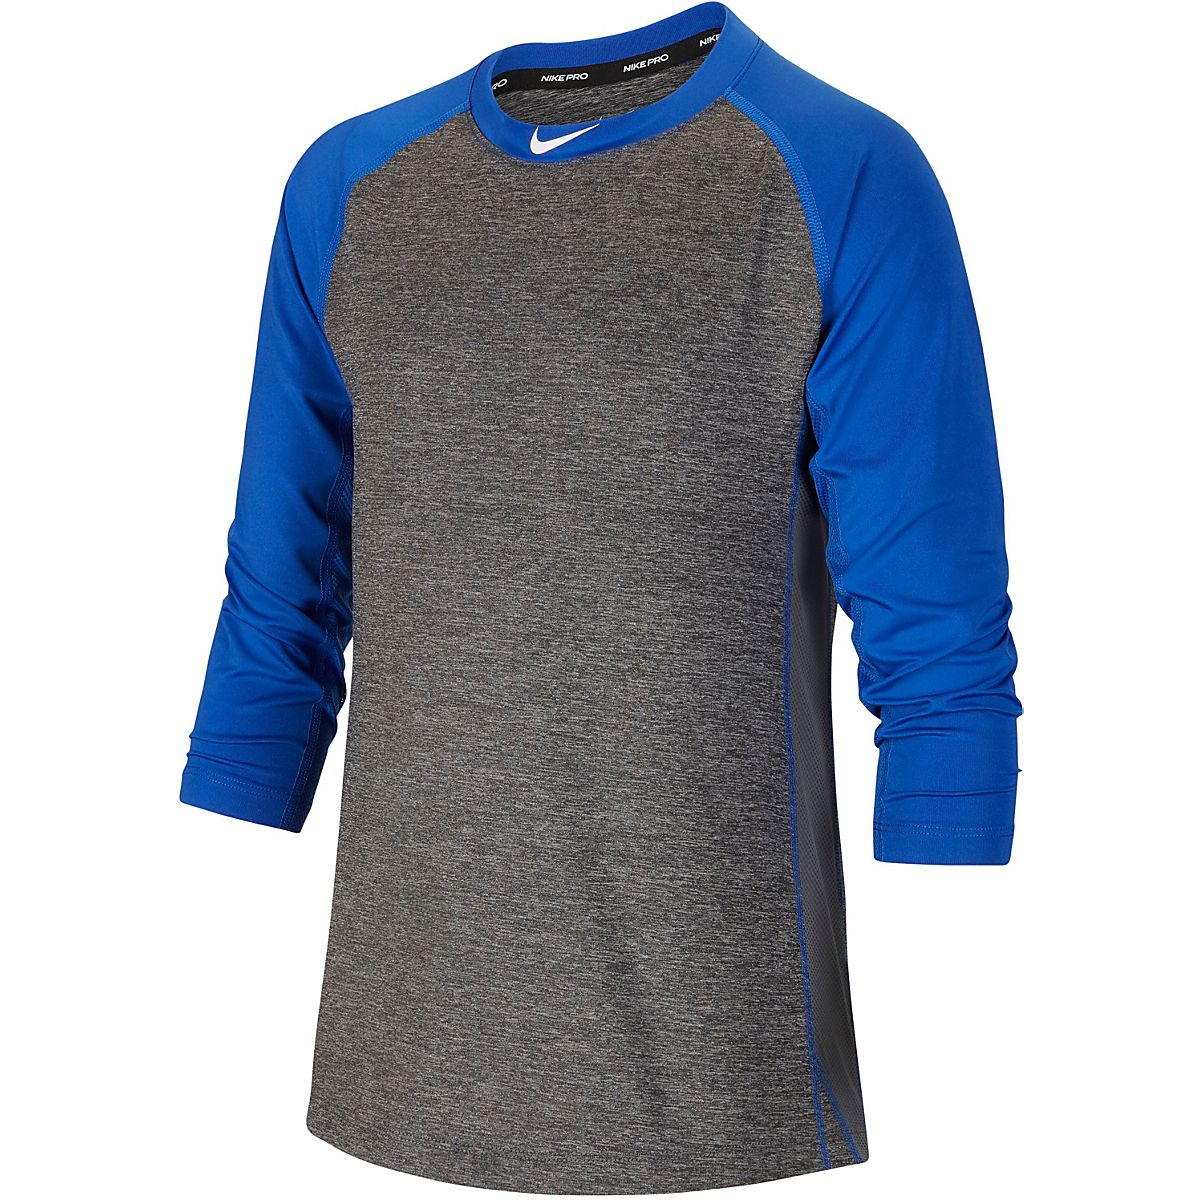 Nike Men's Dri-FIT 3/4 Sleeve Baseball T-shirt